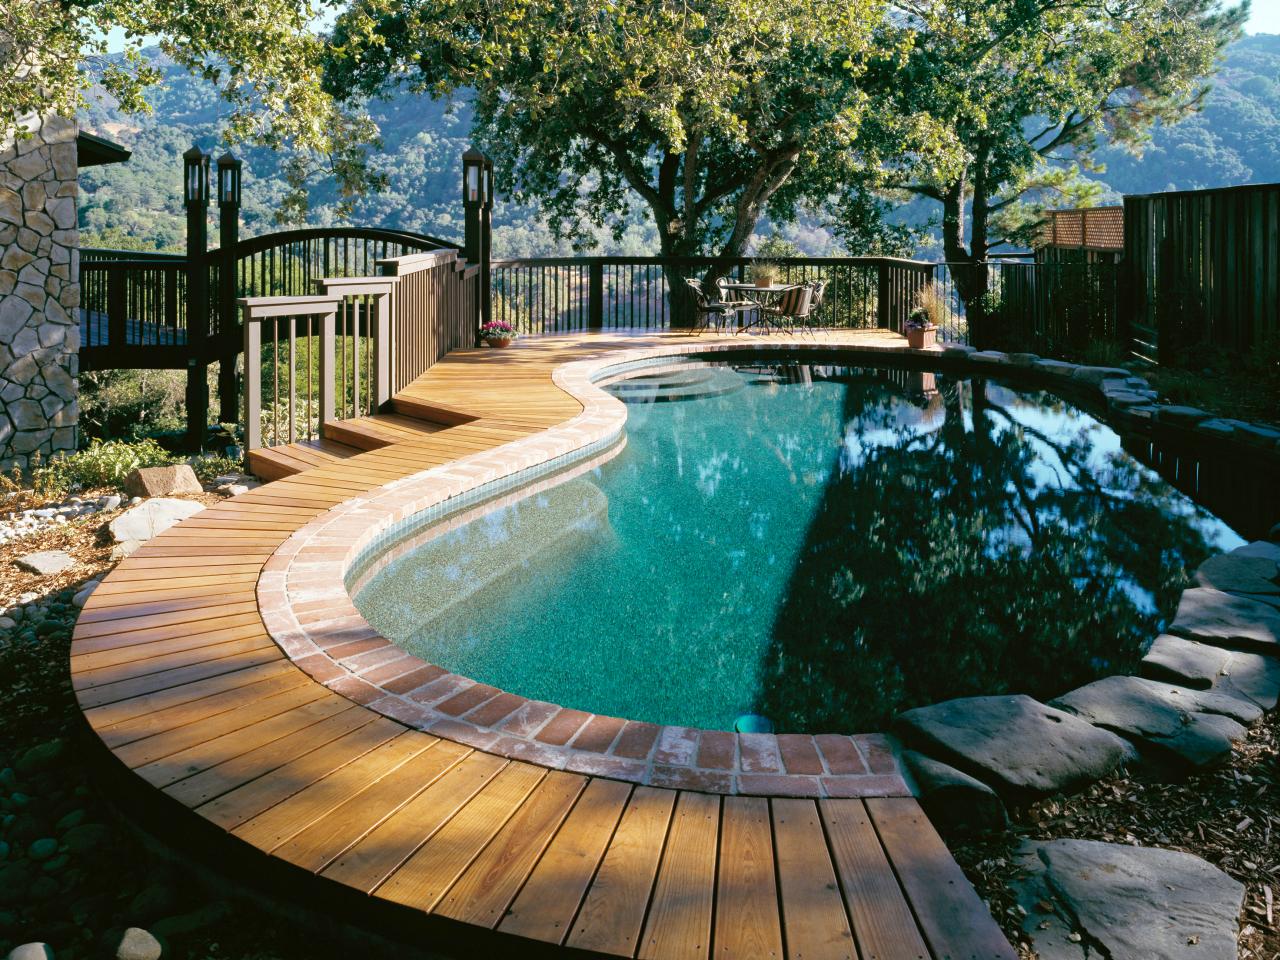 Pool Deck Designs And Options Diy, Swimming Pool Decks Above Ground Designs